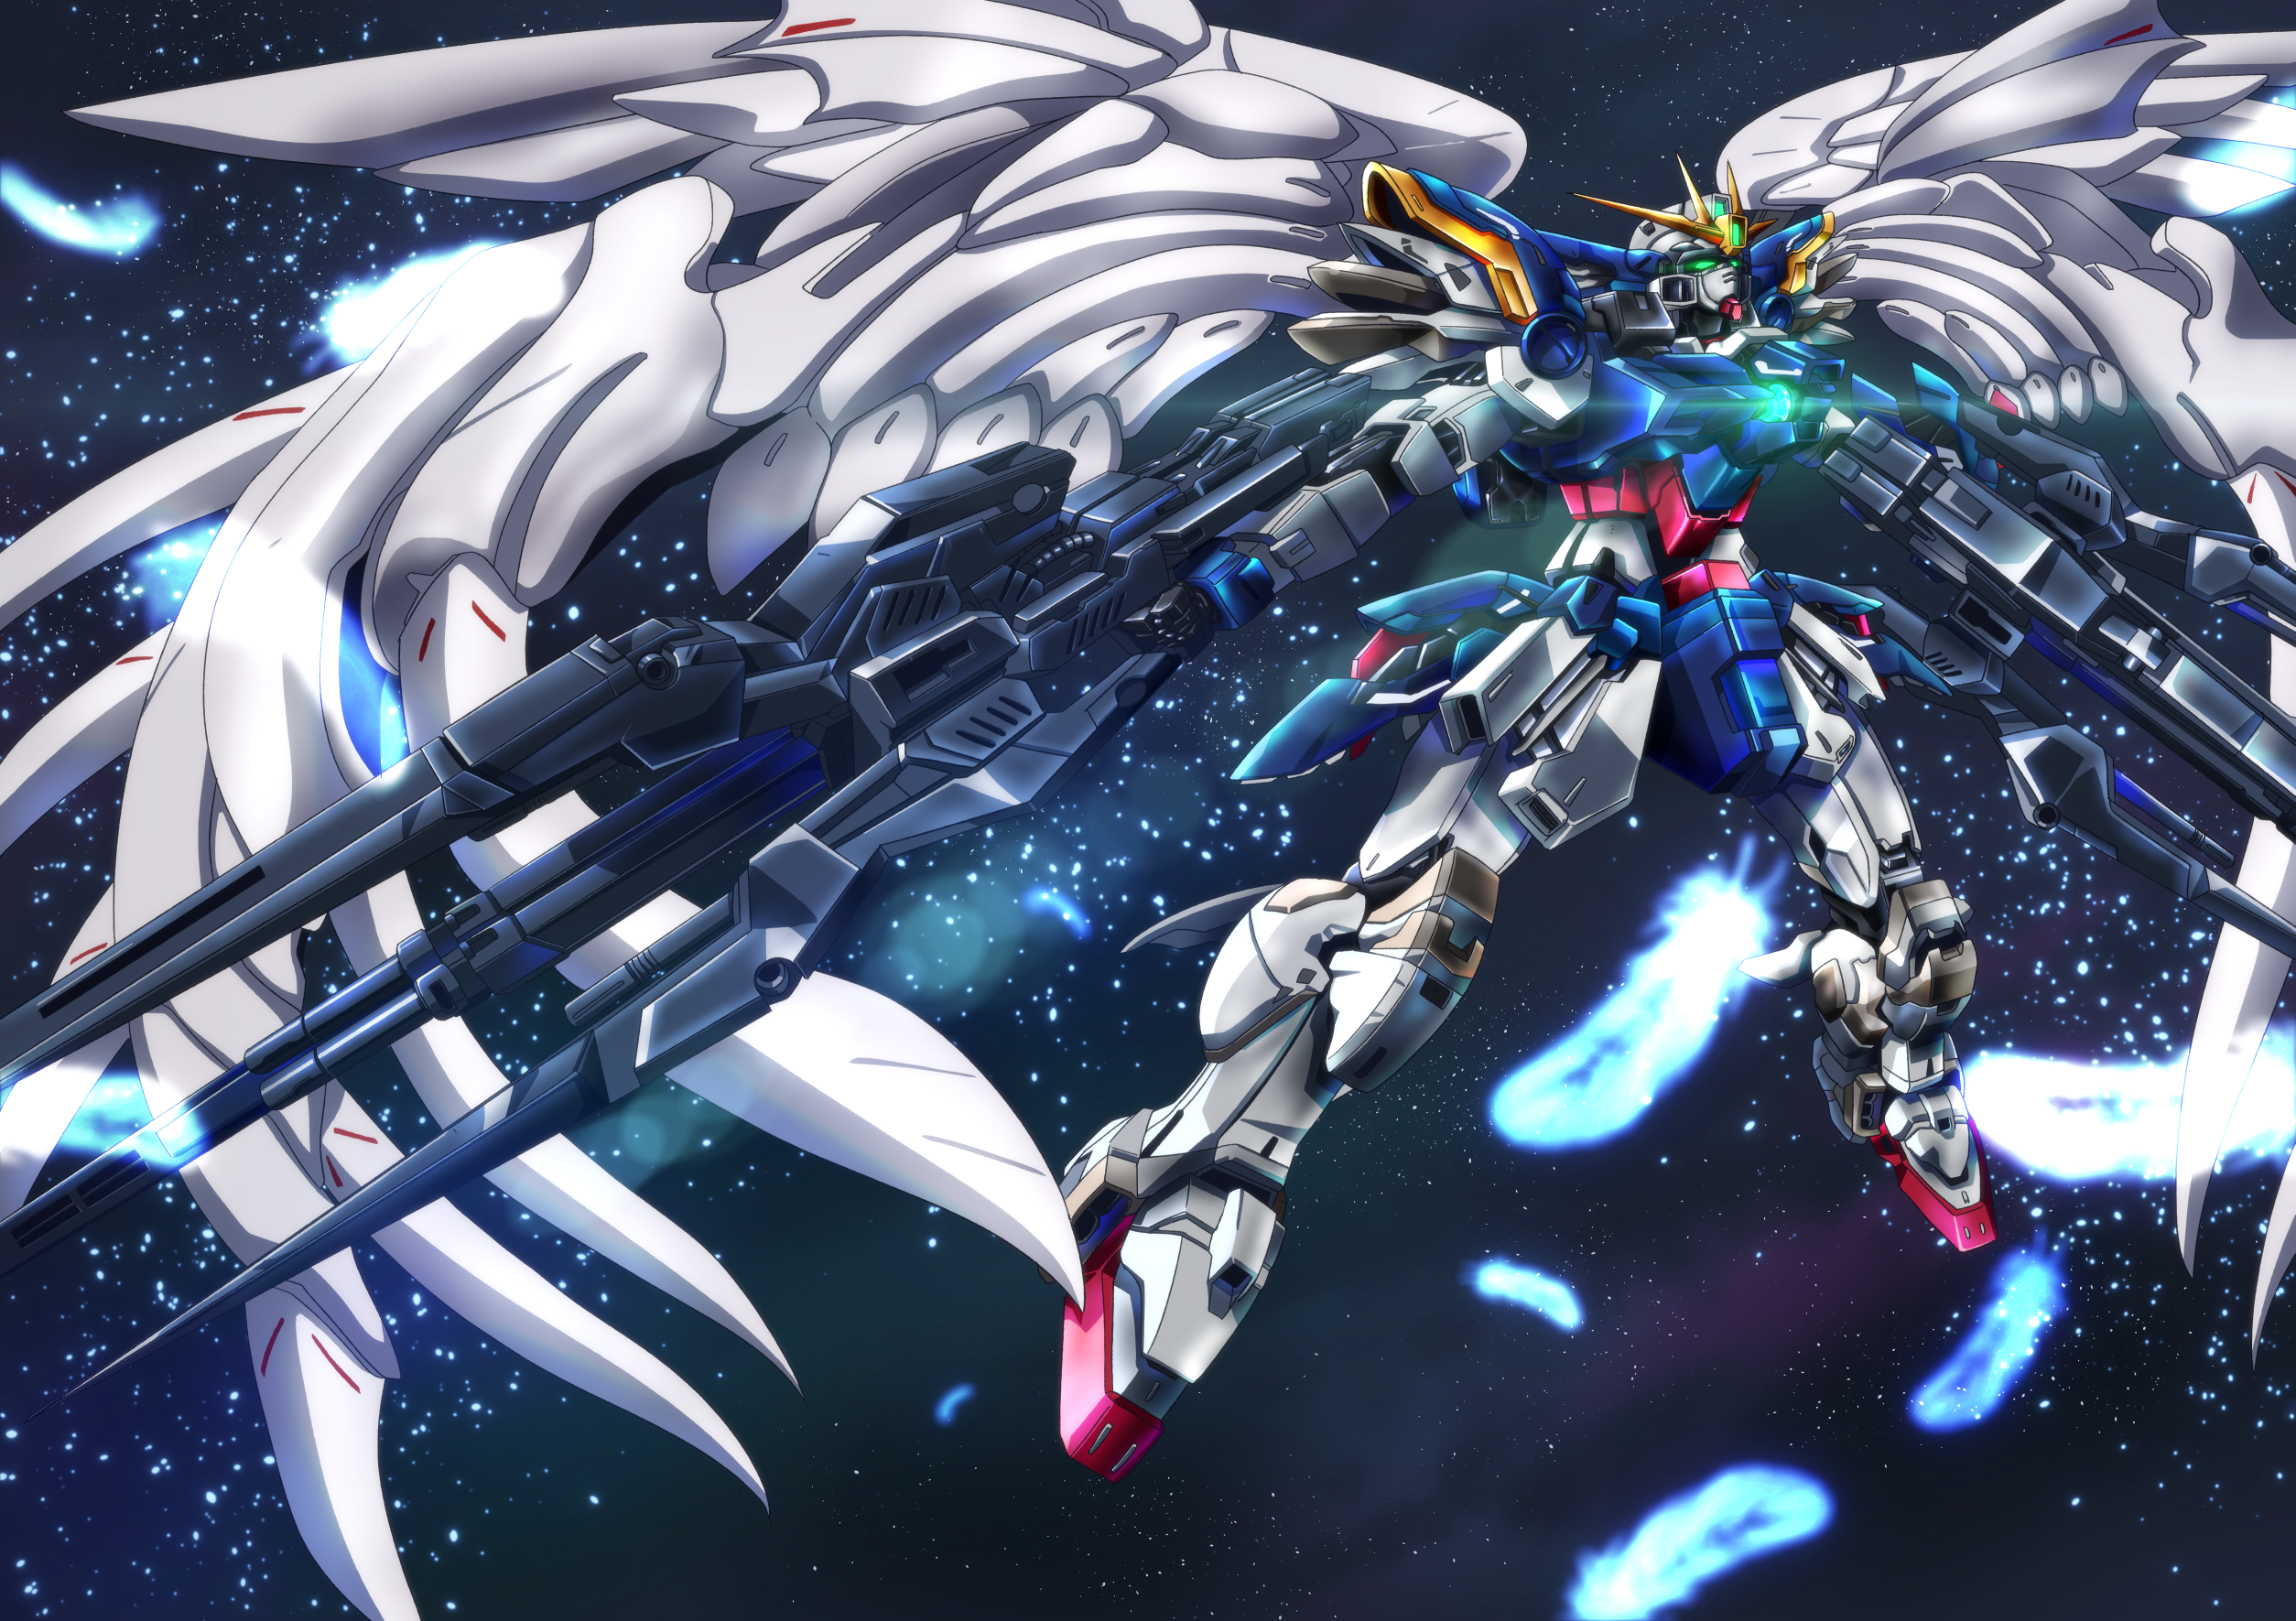 Anime Robot Gundam Super Robot Wars Mobile Suit Gundam Wing Wing Gundam Zero Artwork Digital Art Fan 2508x1771